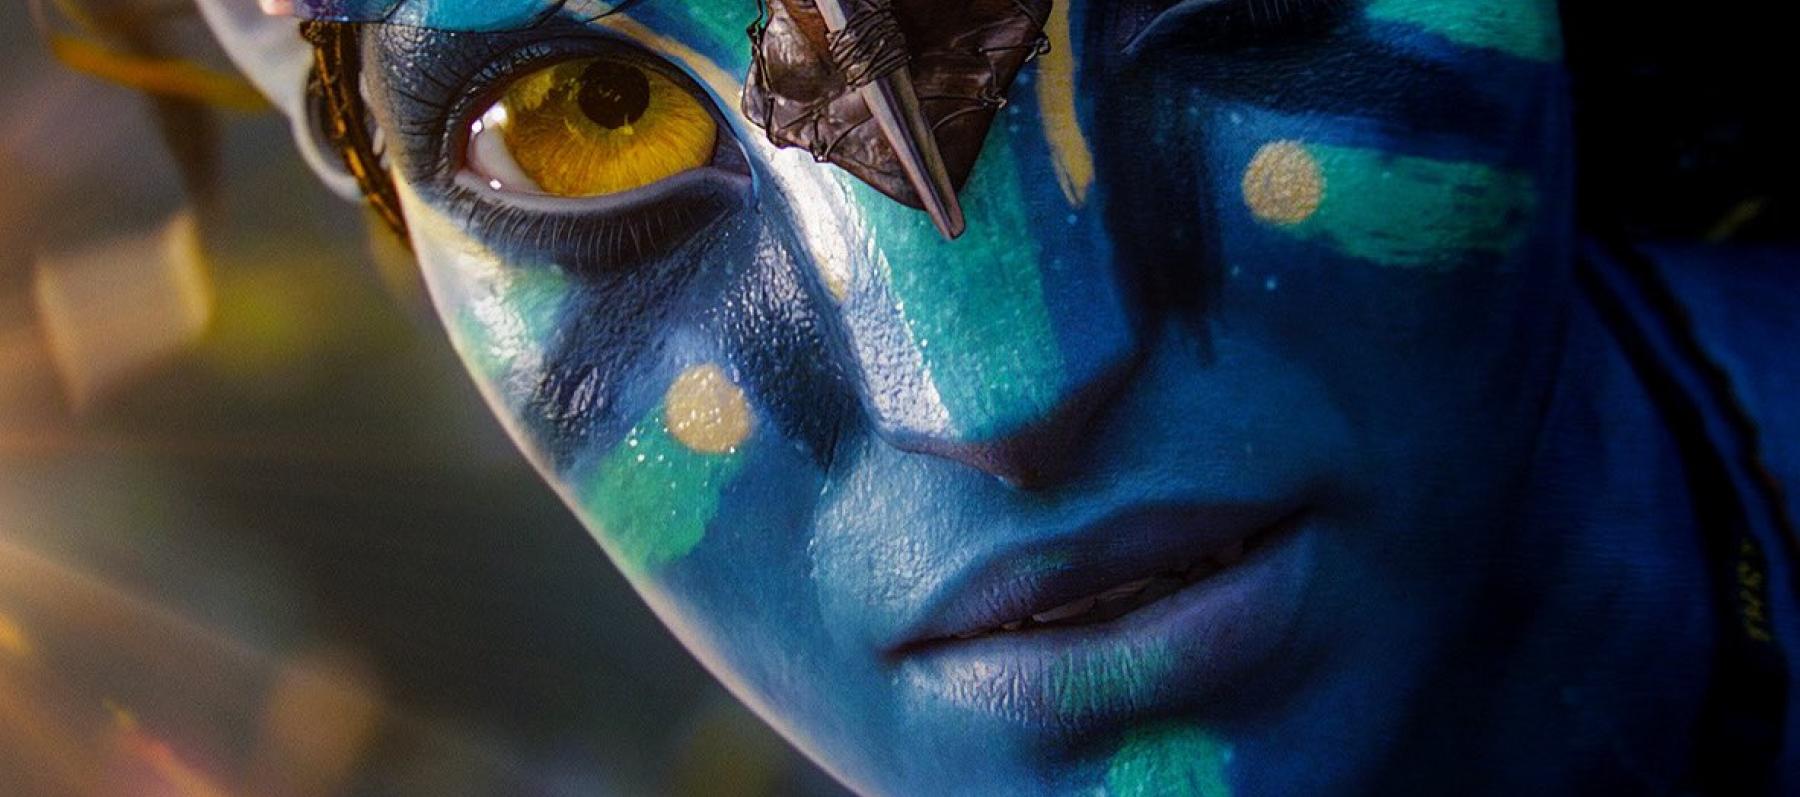 بوستر فيلم Avatar 1- تويتر @jimcameron